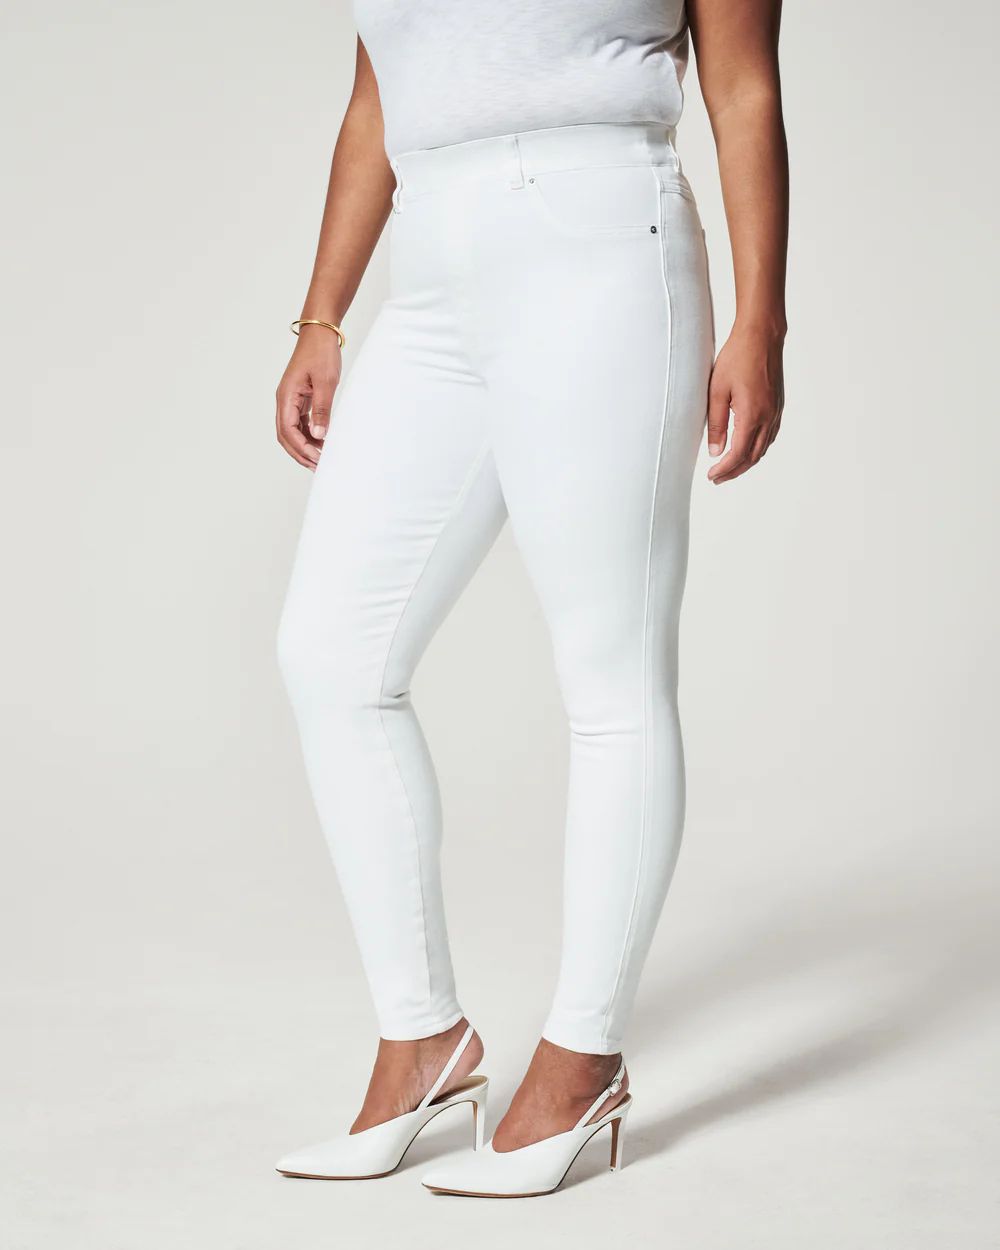 Ankle Skinny Jeans, White | Spanx